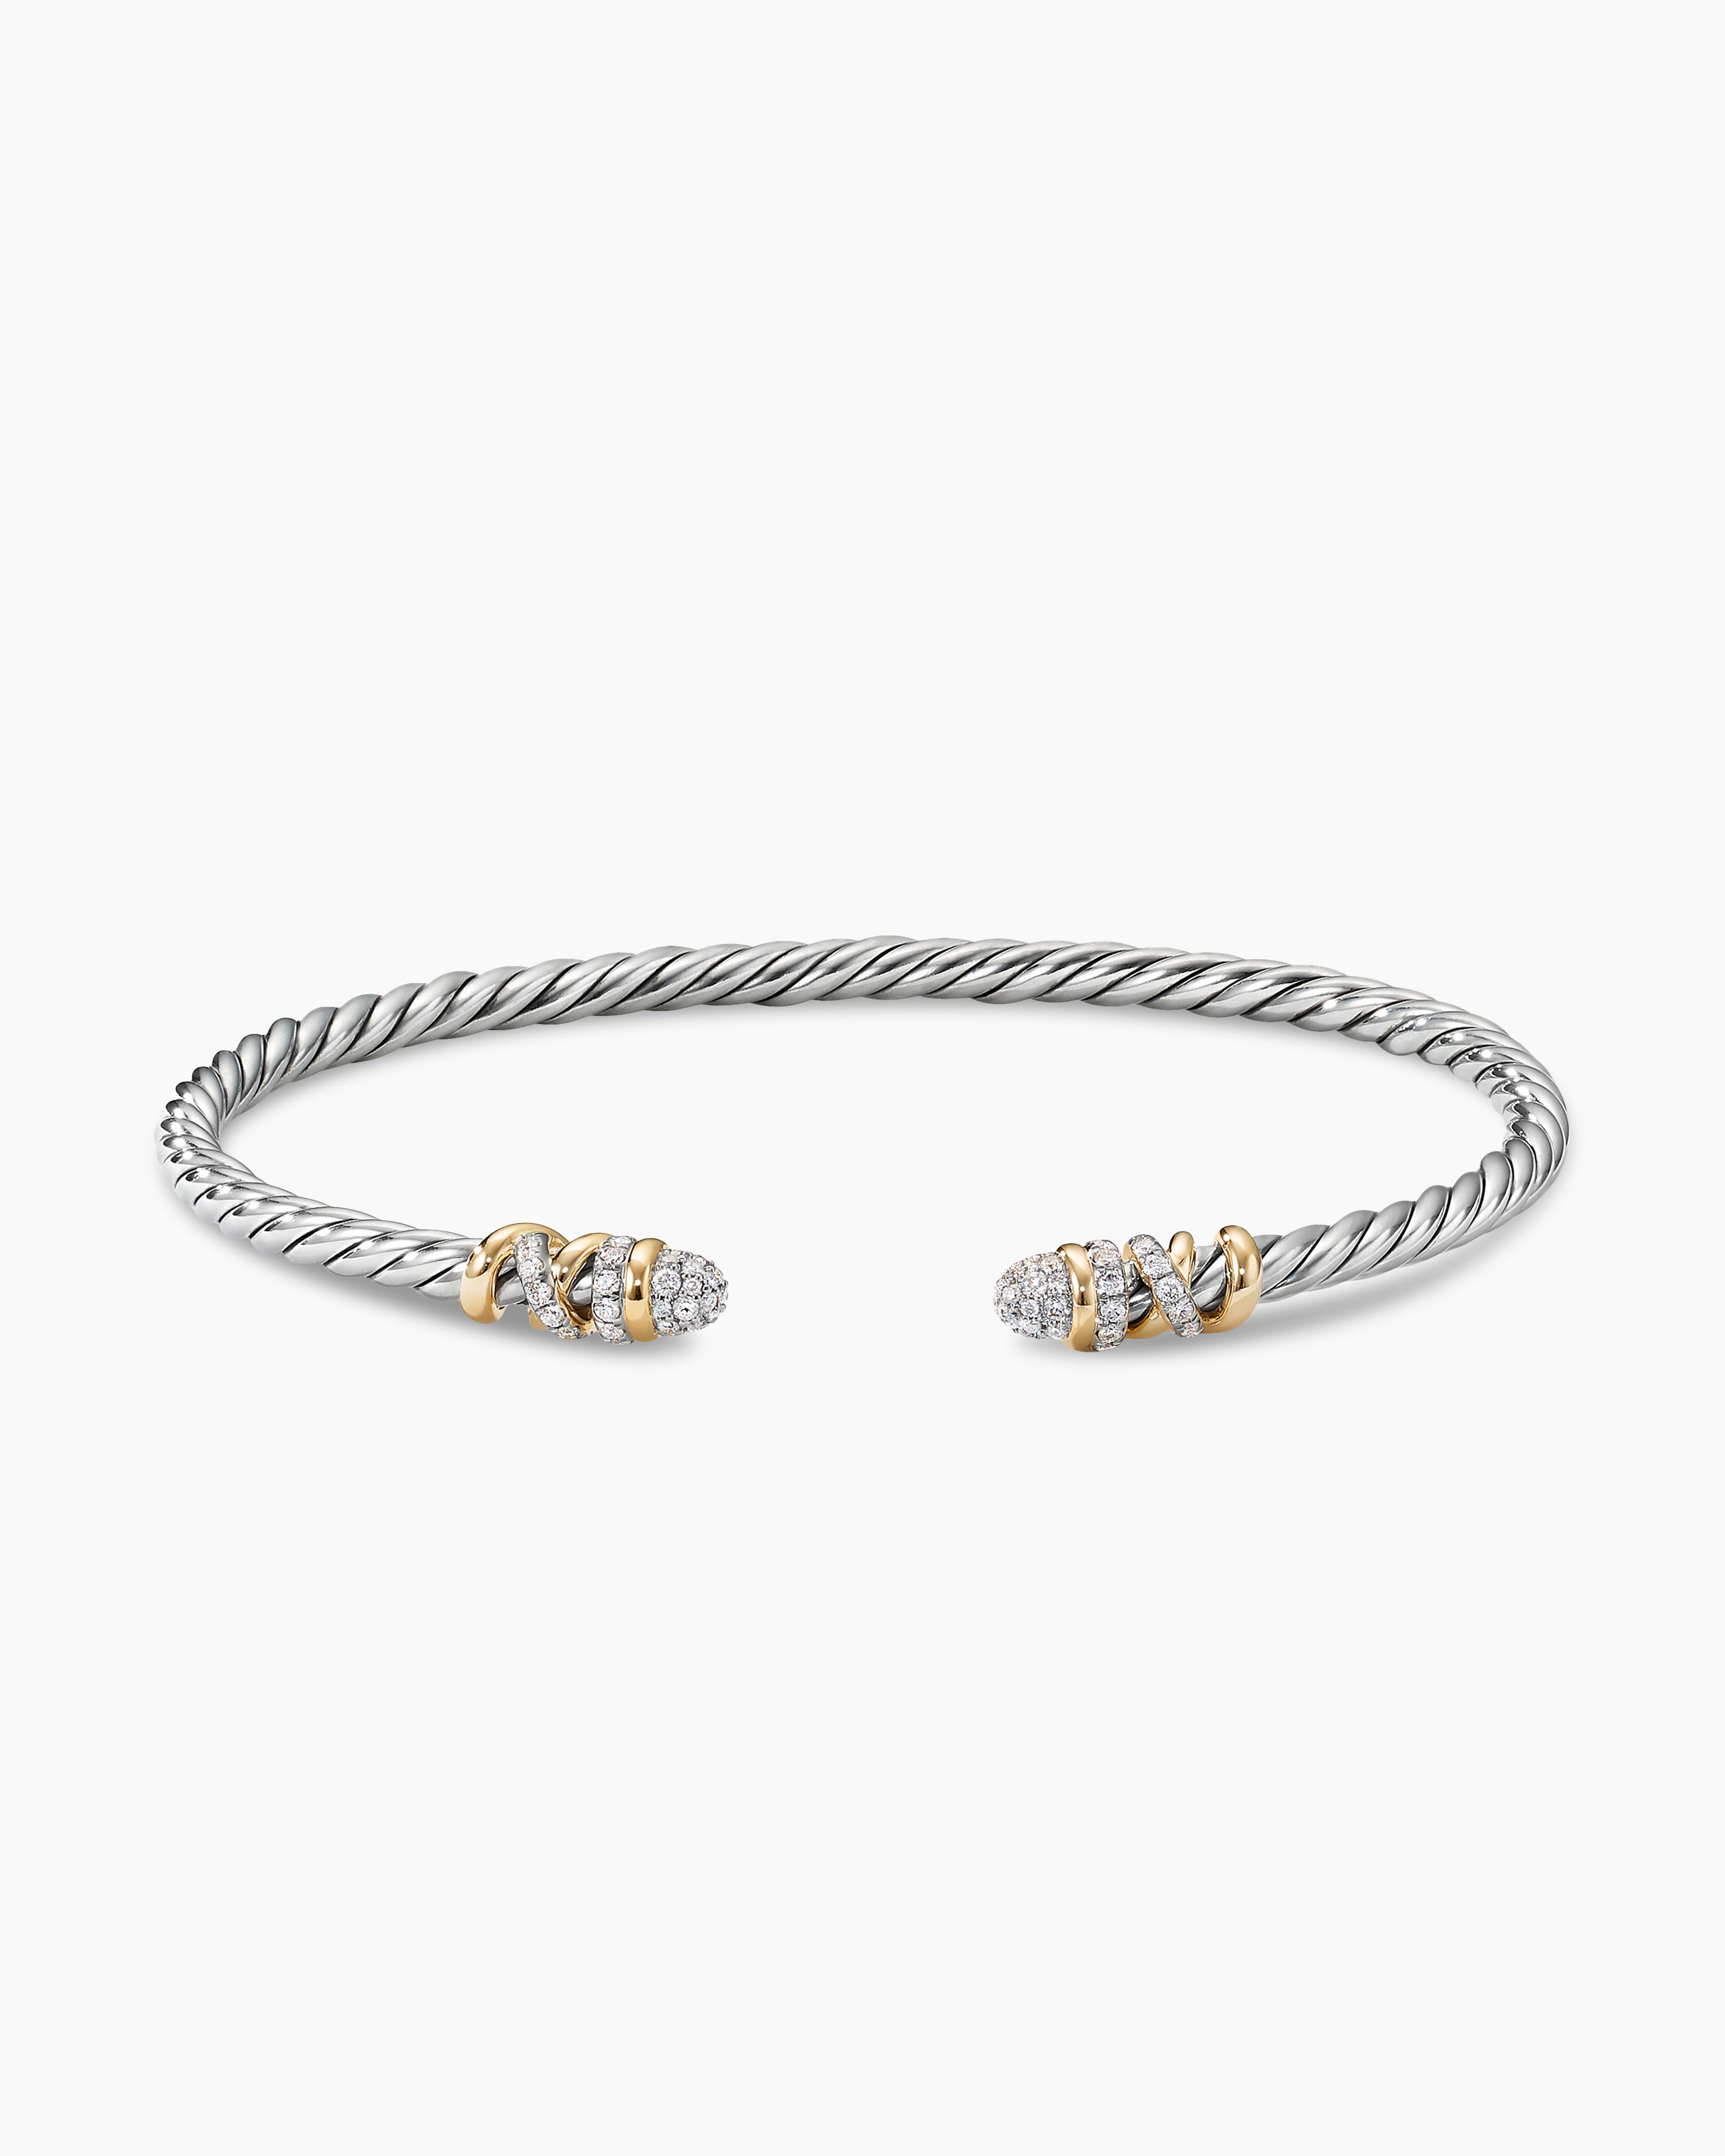 David Yurman Stax Chain Link Bracelet with Diamonds in 18K Gold |  Bloomingdale's